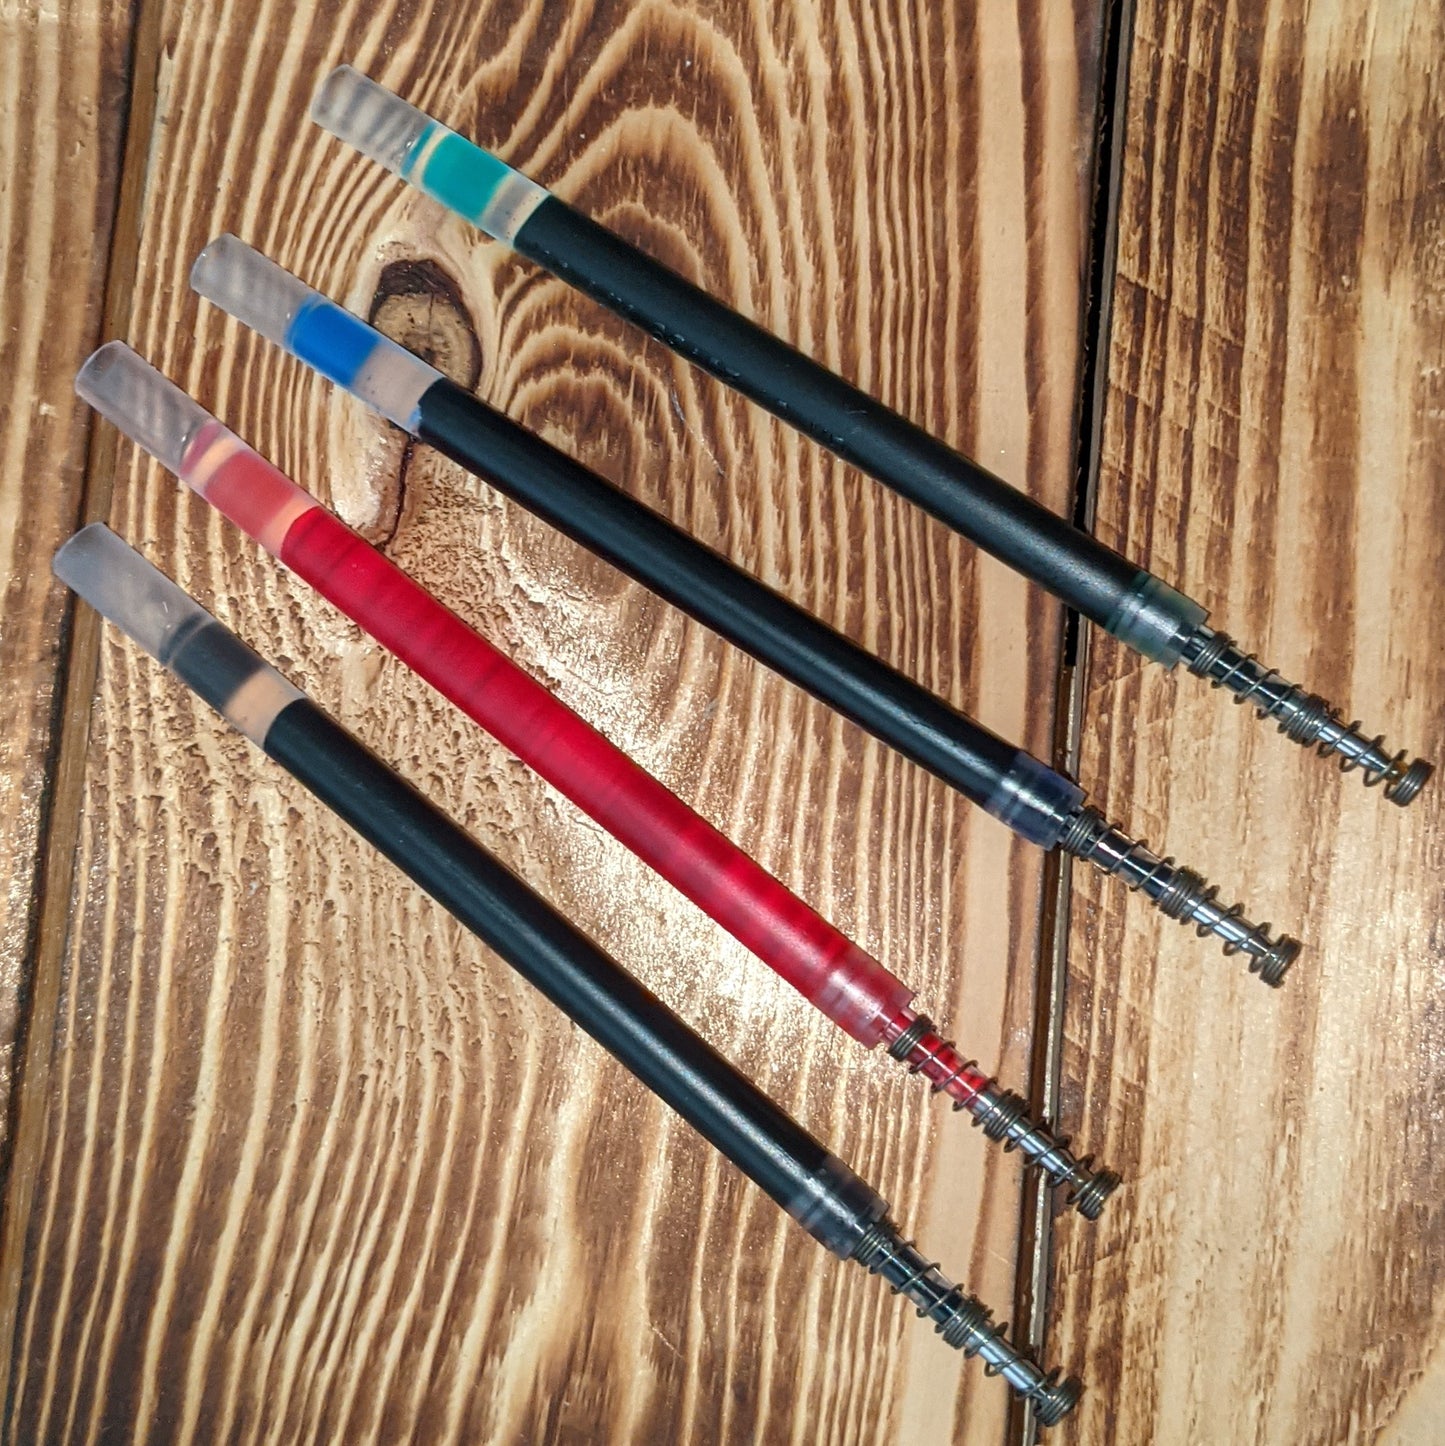 Refills for the gel pens